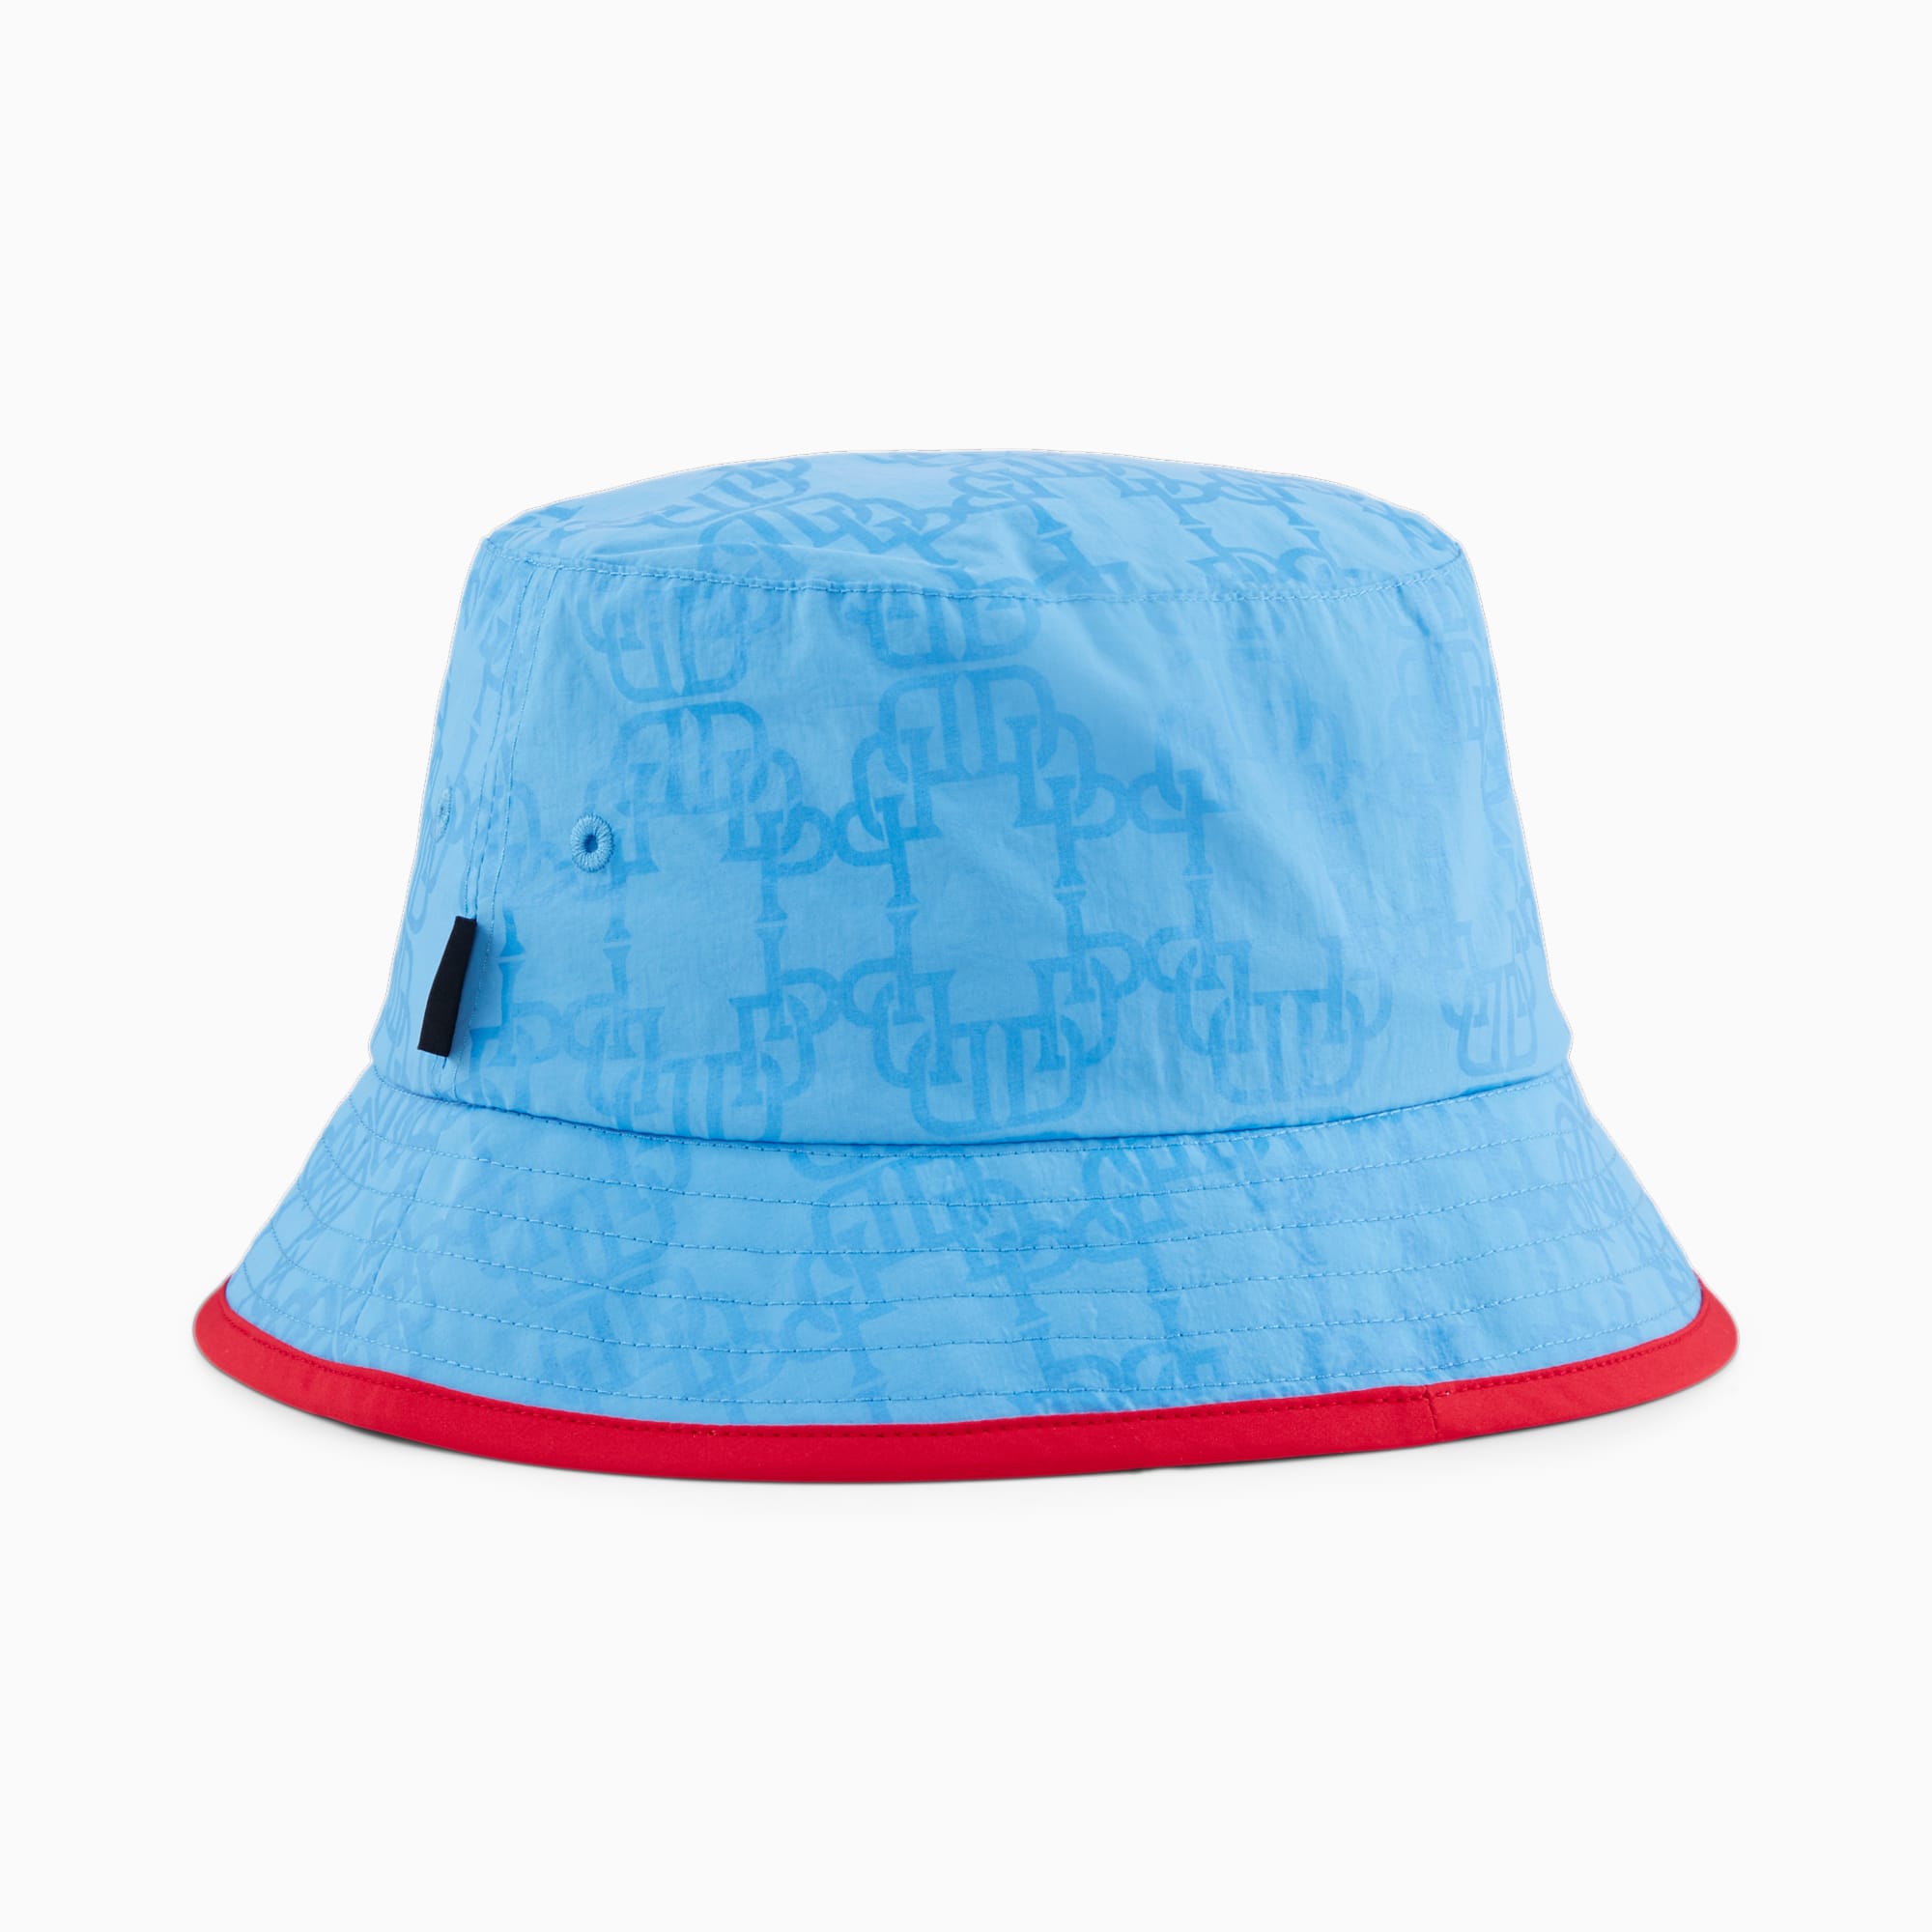 PUMA X DAPPER DAN Bucket Hat, Blau, Größe: S/M, Accessoires